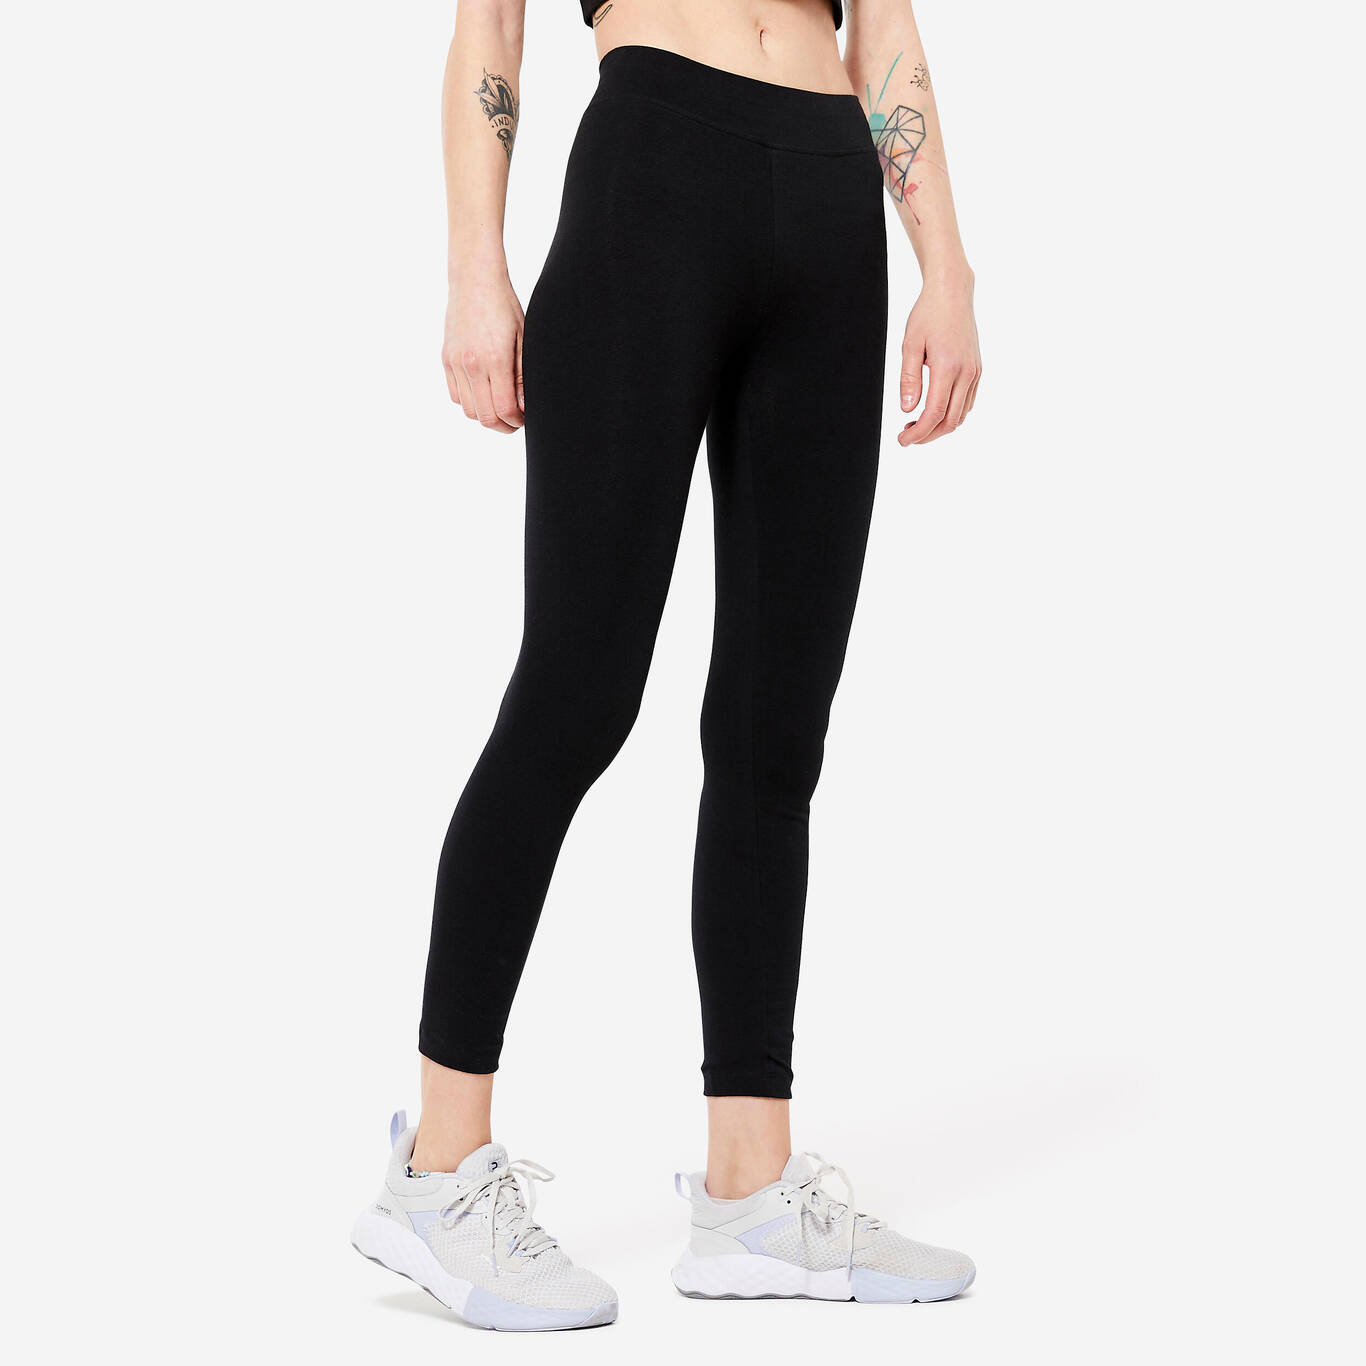 Domyos Women's Cropped Fitness Leggings - Black (XS / W26 L28